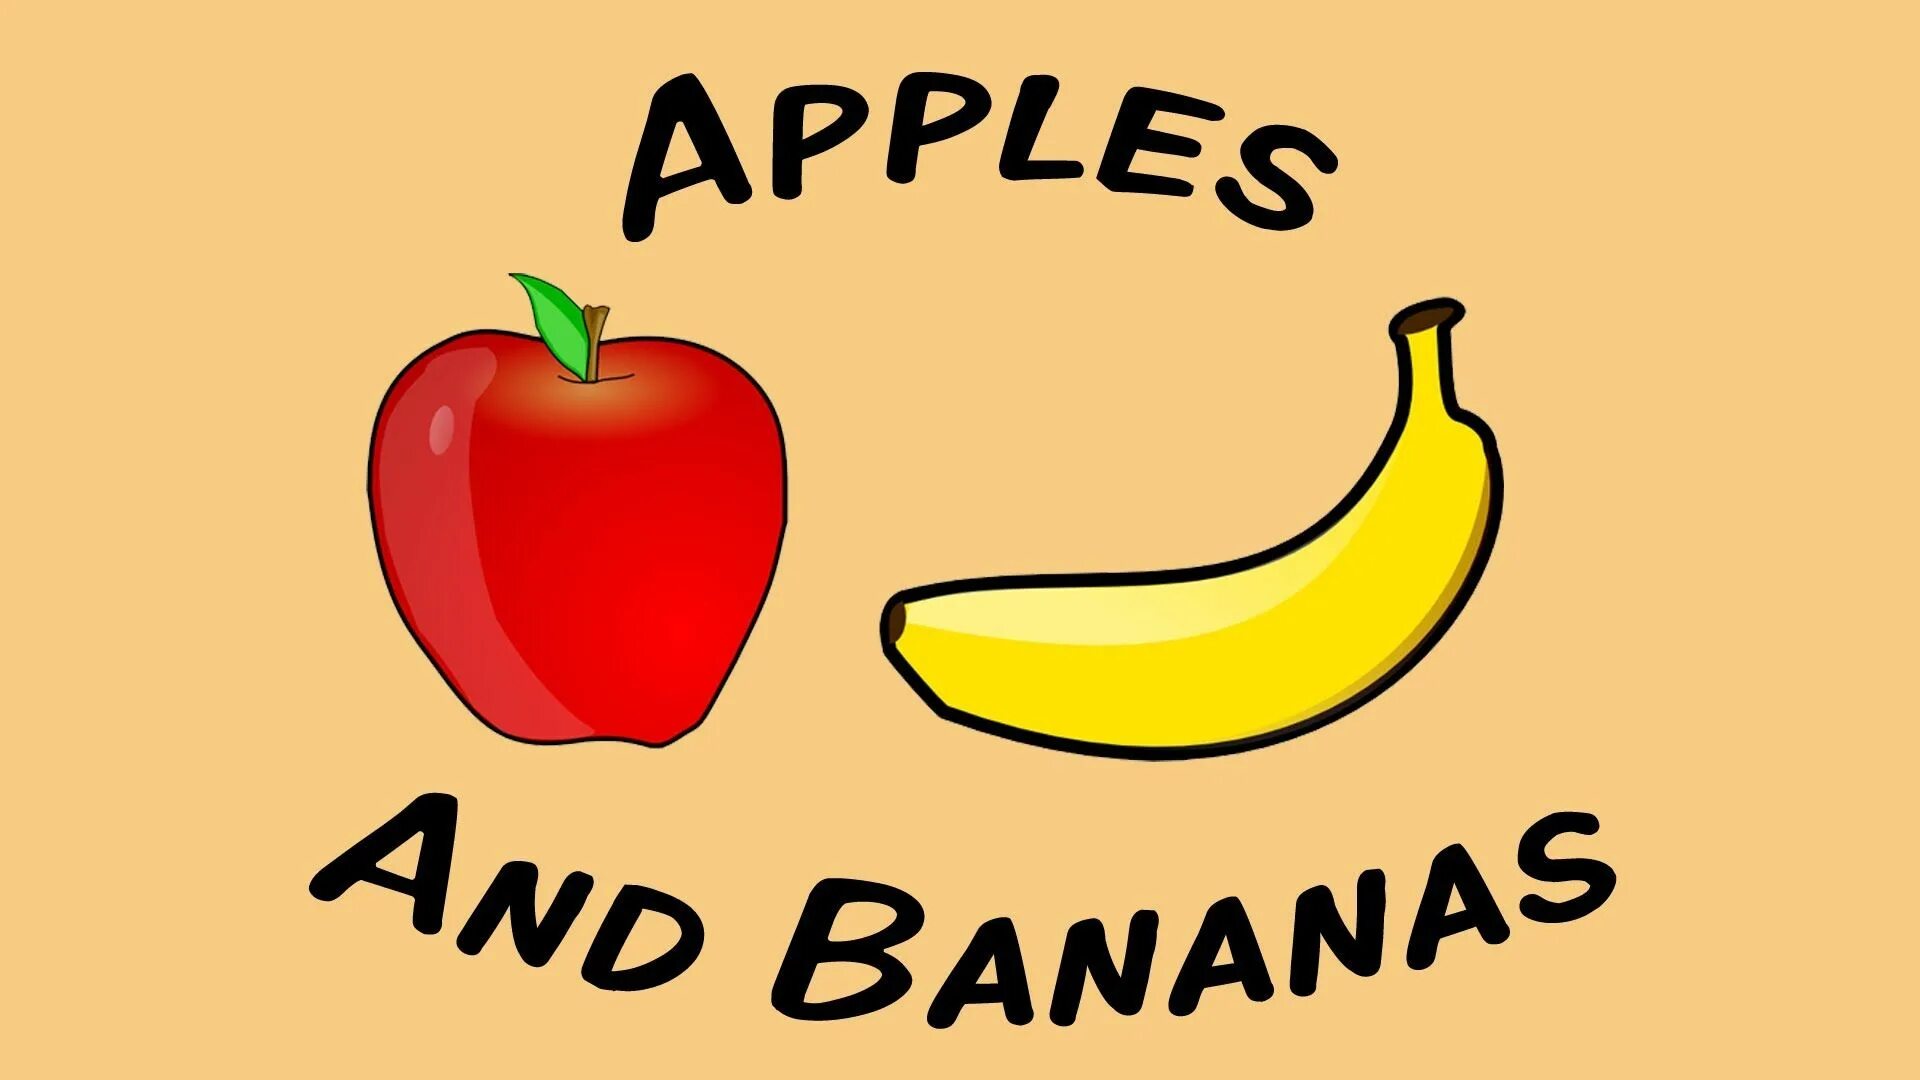 I like bananas apples. Яблоки и бананы. Банан рисунок. Рисунок яблок и бананов. Банан по английскому.